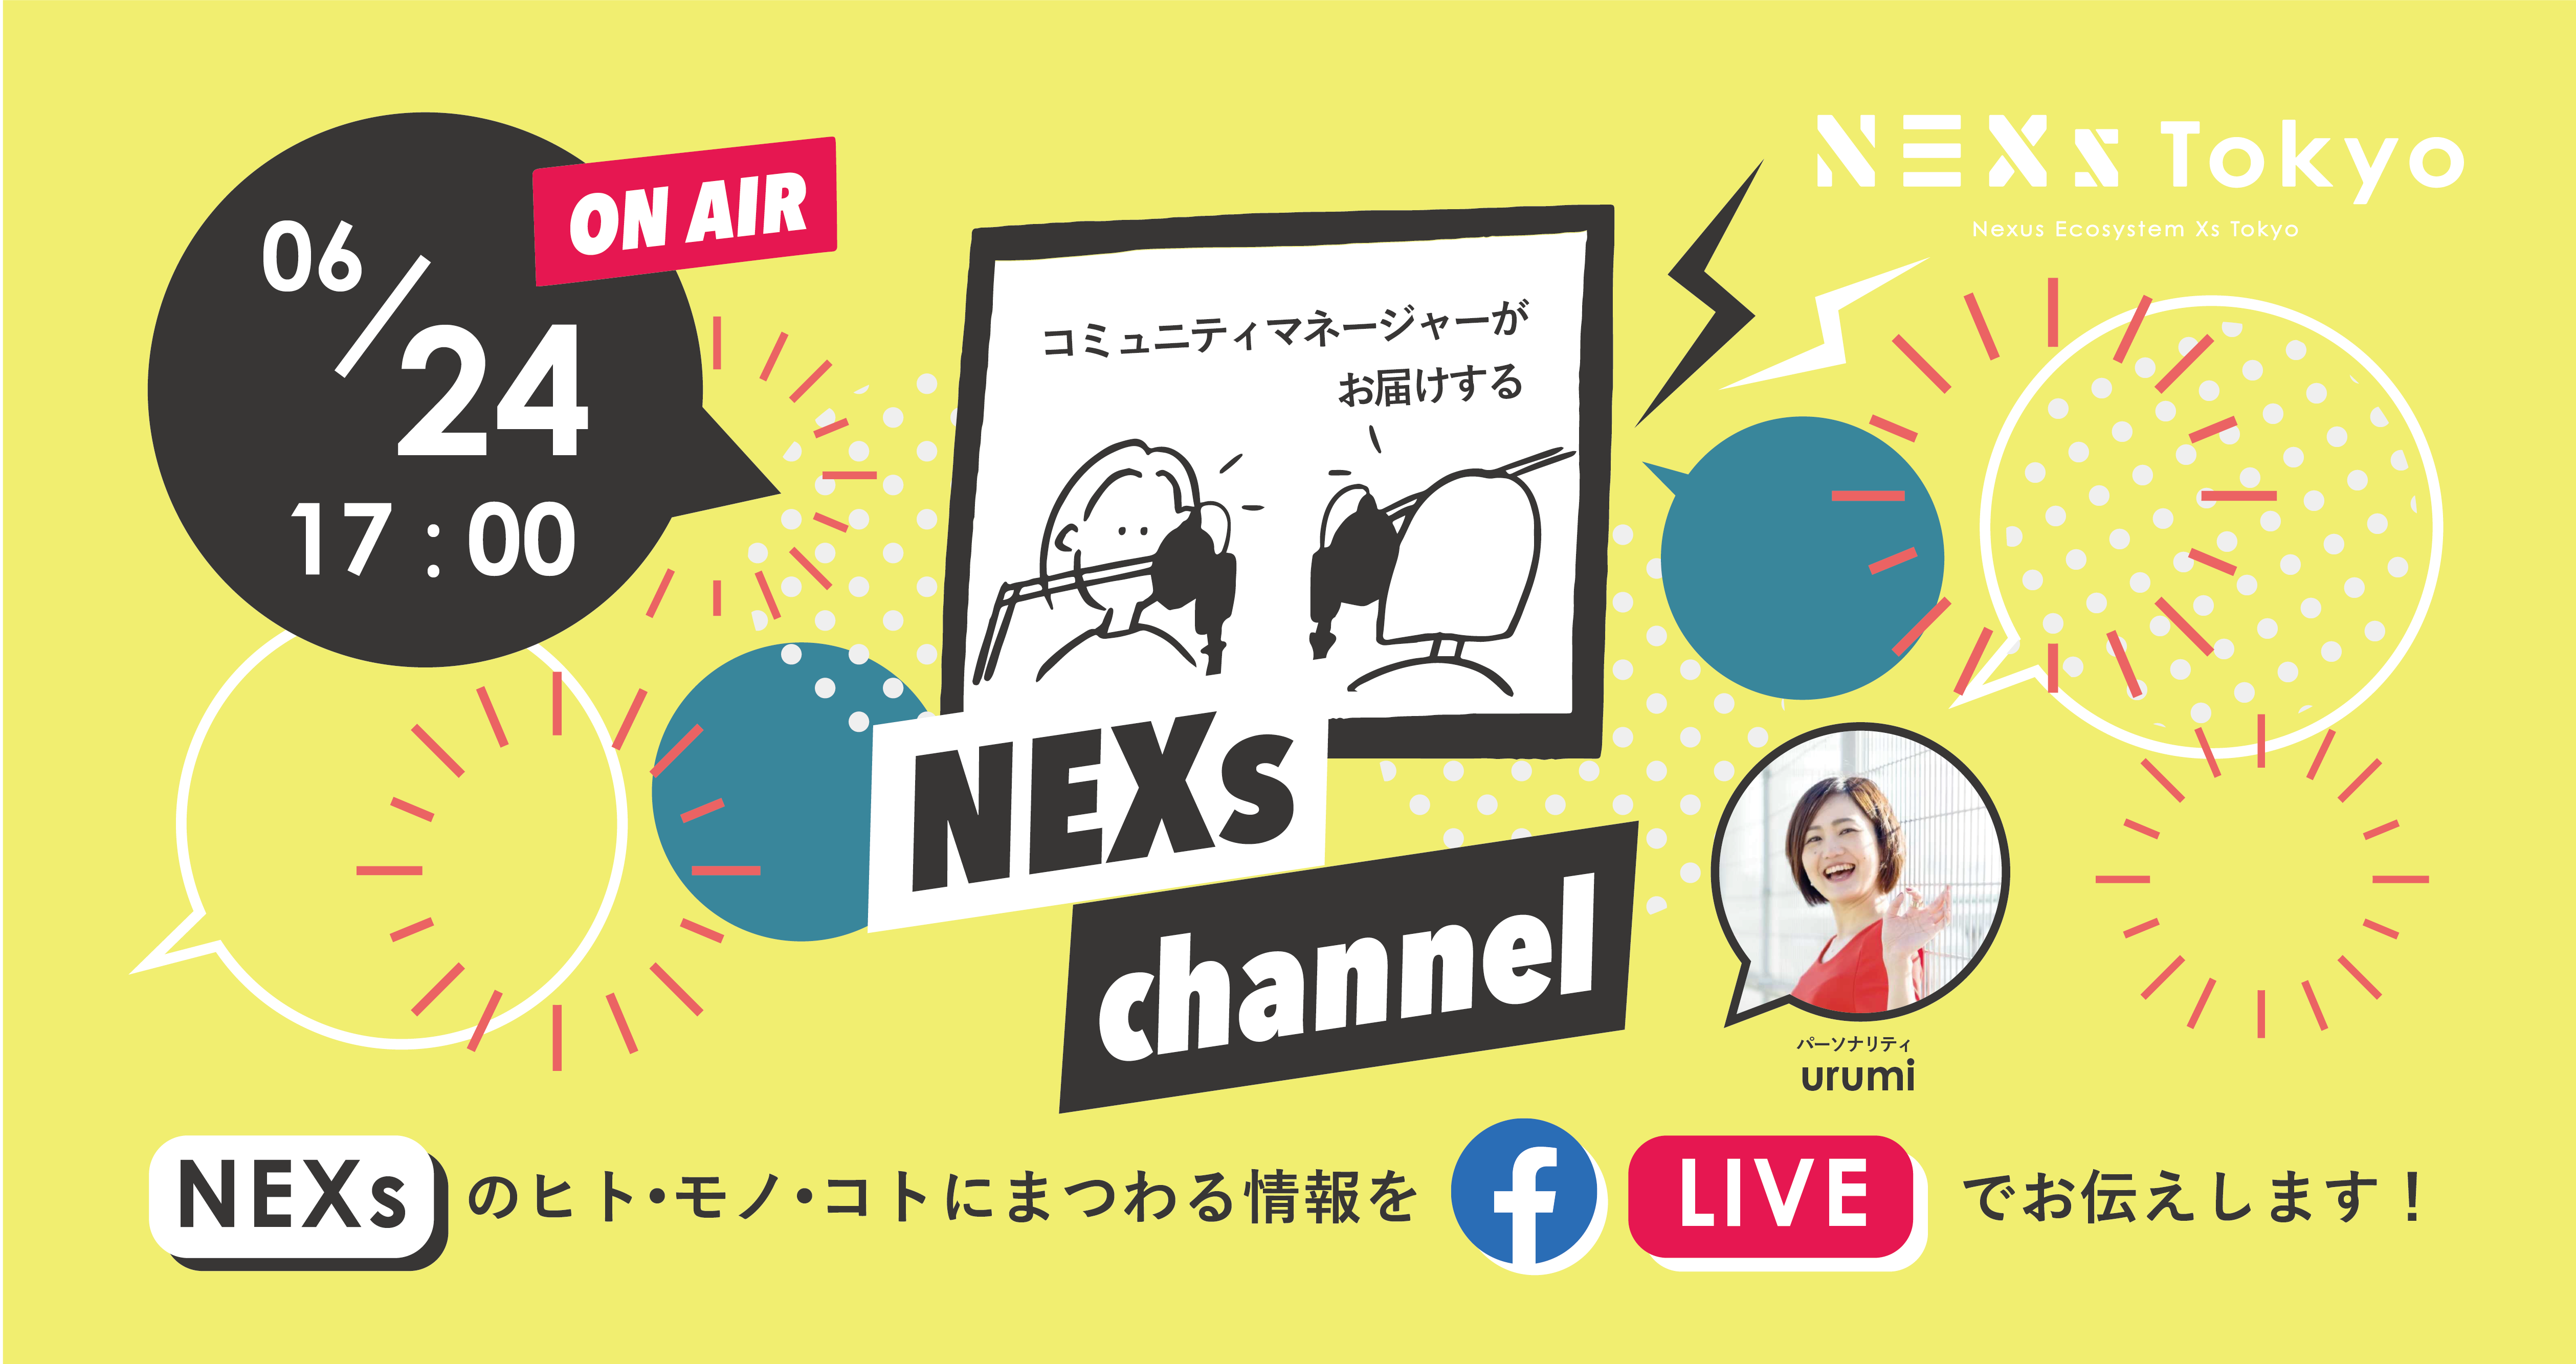 NEXs channel #6-NEXsTokyoのヒト・モノ・コトを特設ラジオブースから生放送でお届け！-